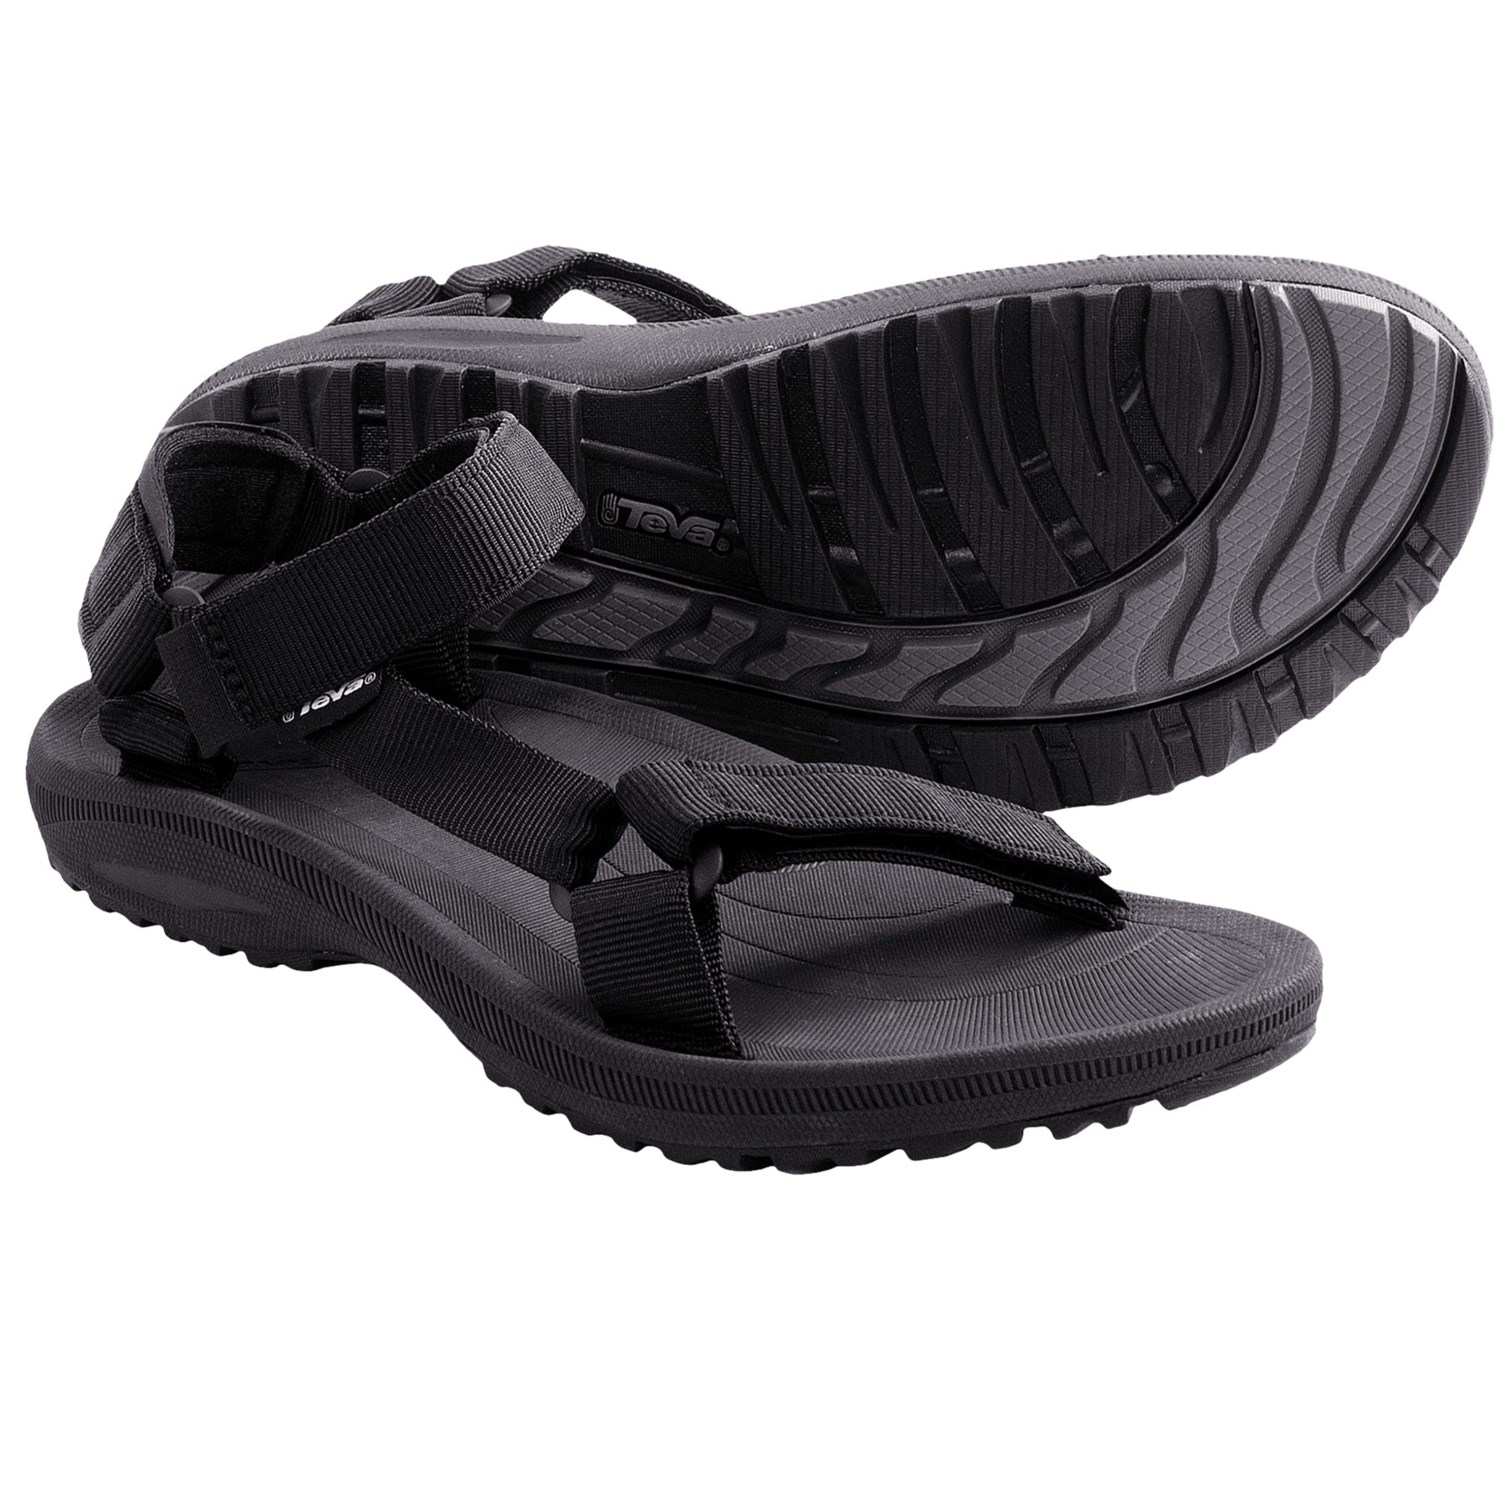 Teva Torin Sport Sandals (For Men) - Save 16%